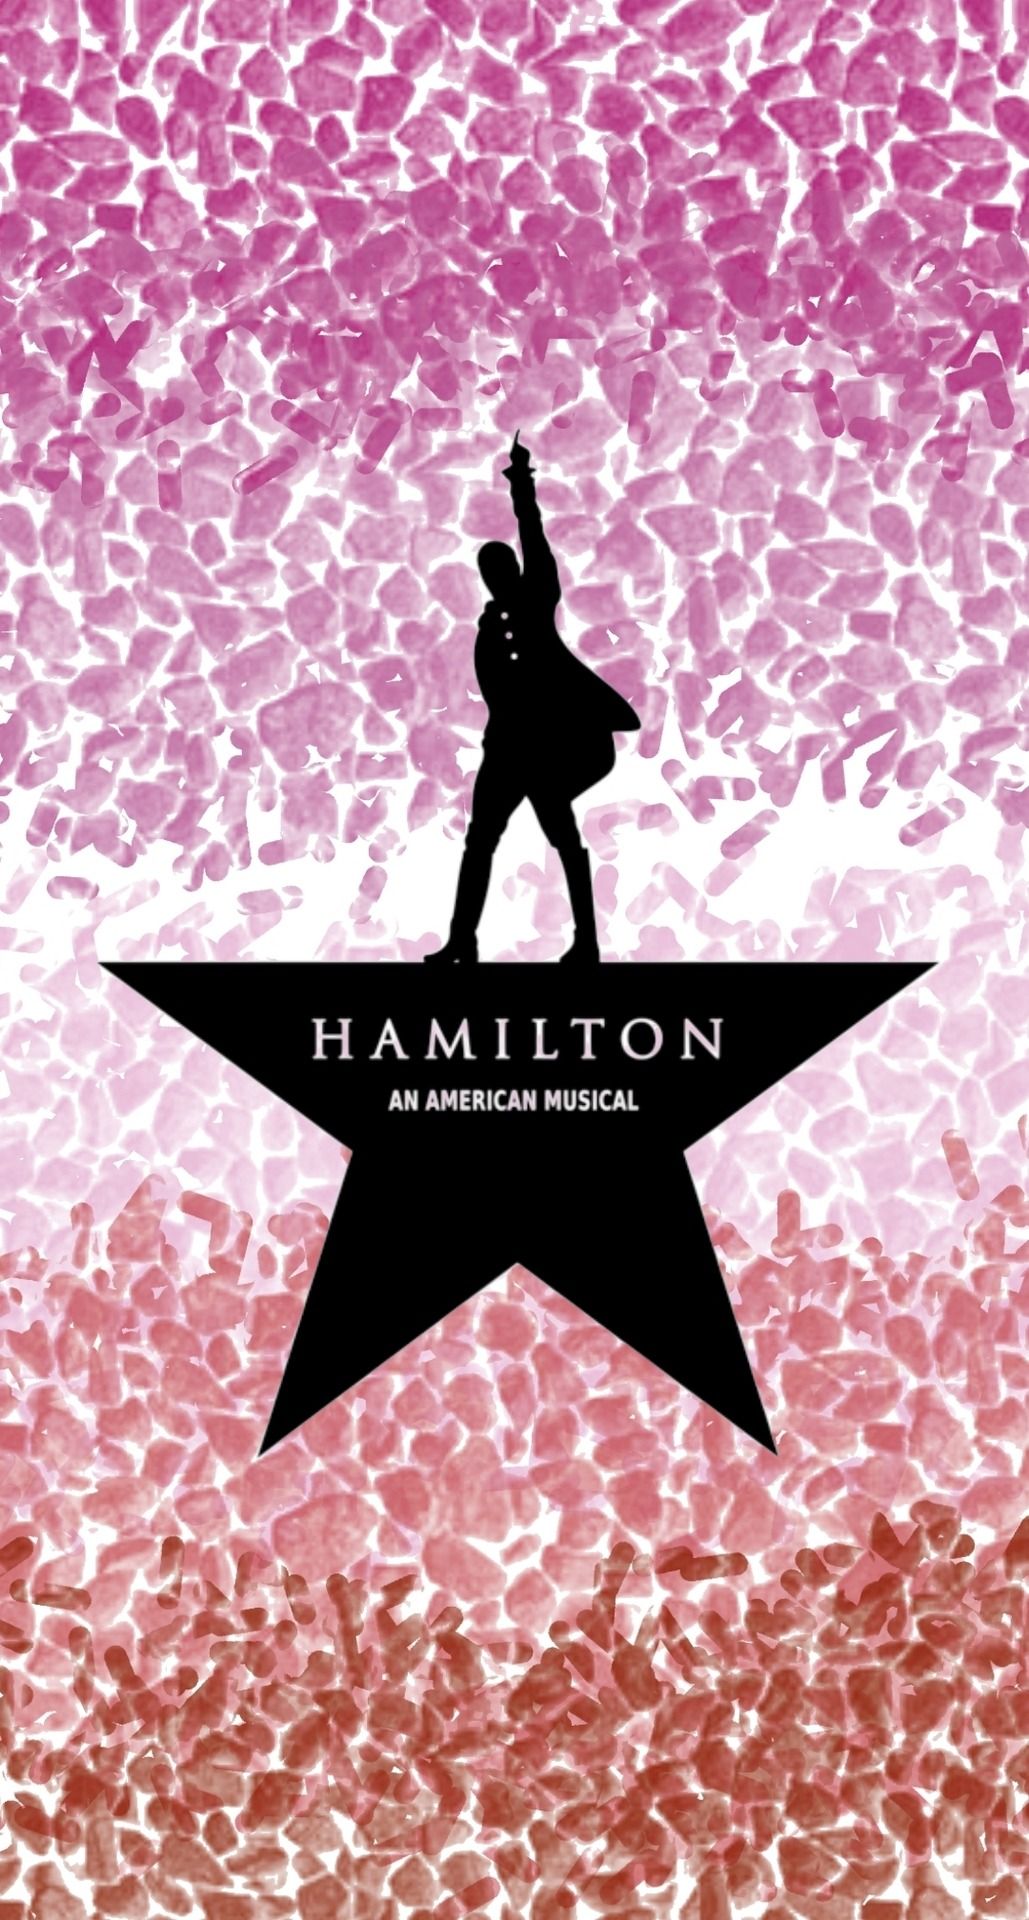 The cover of the Hamilton soundtrack. - Lesbian